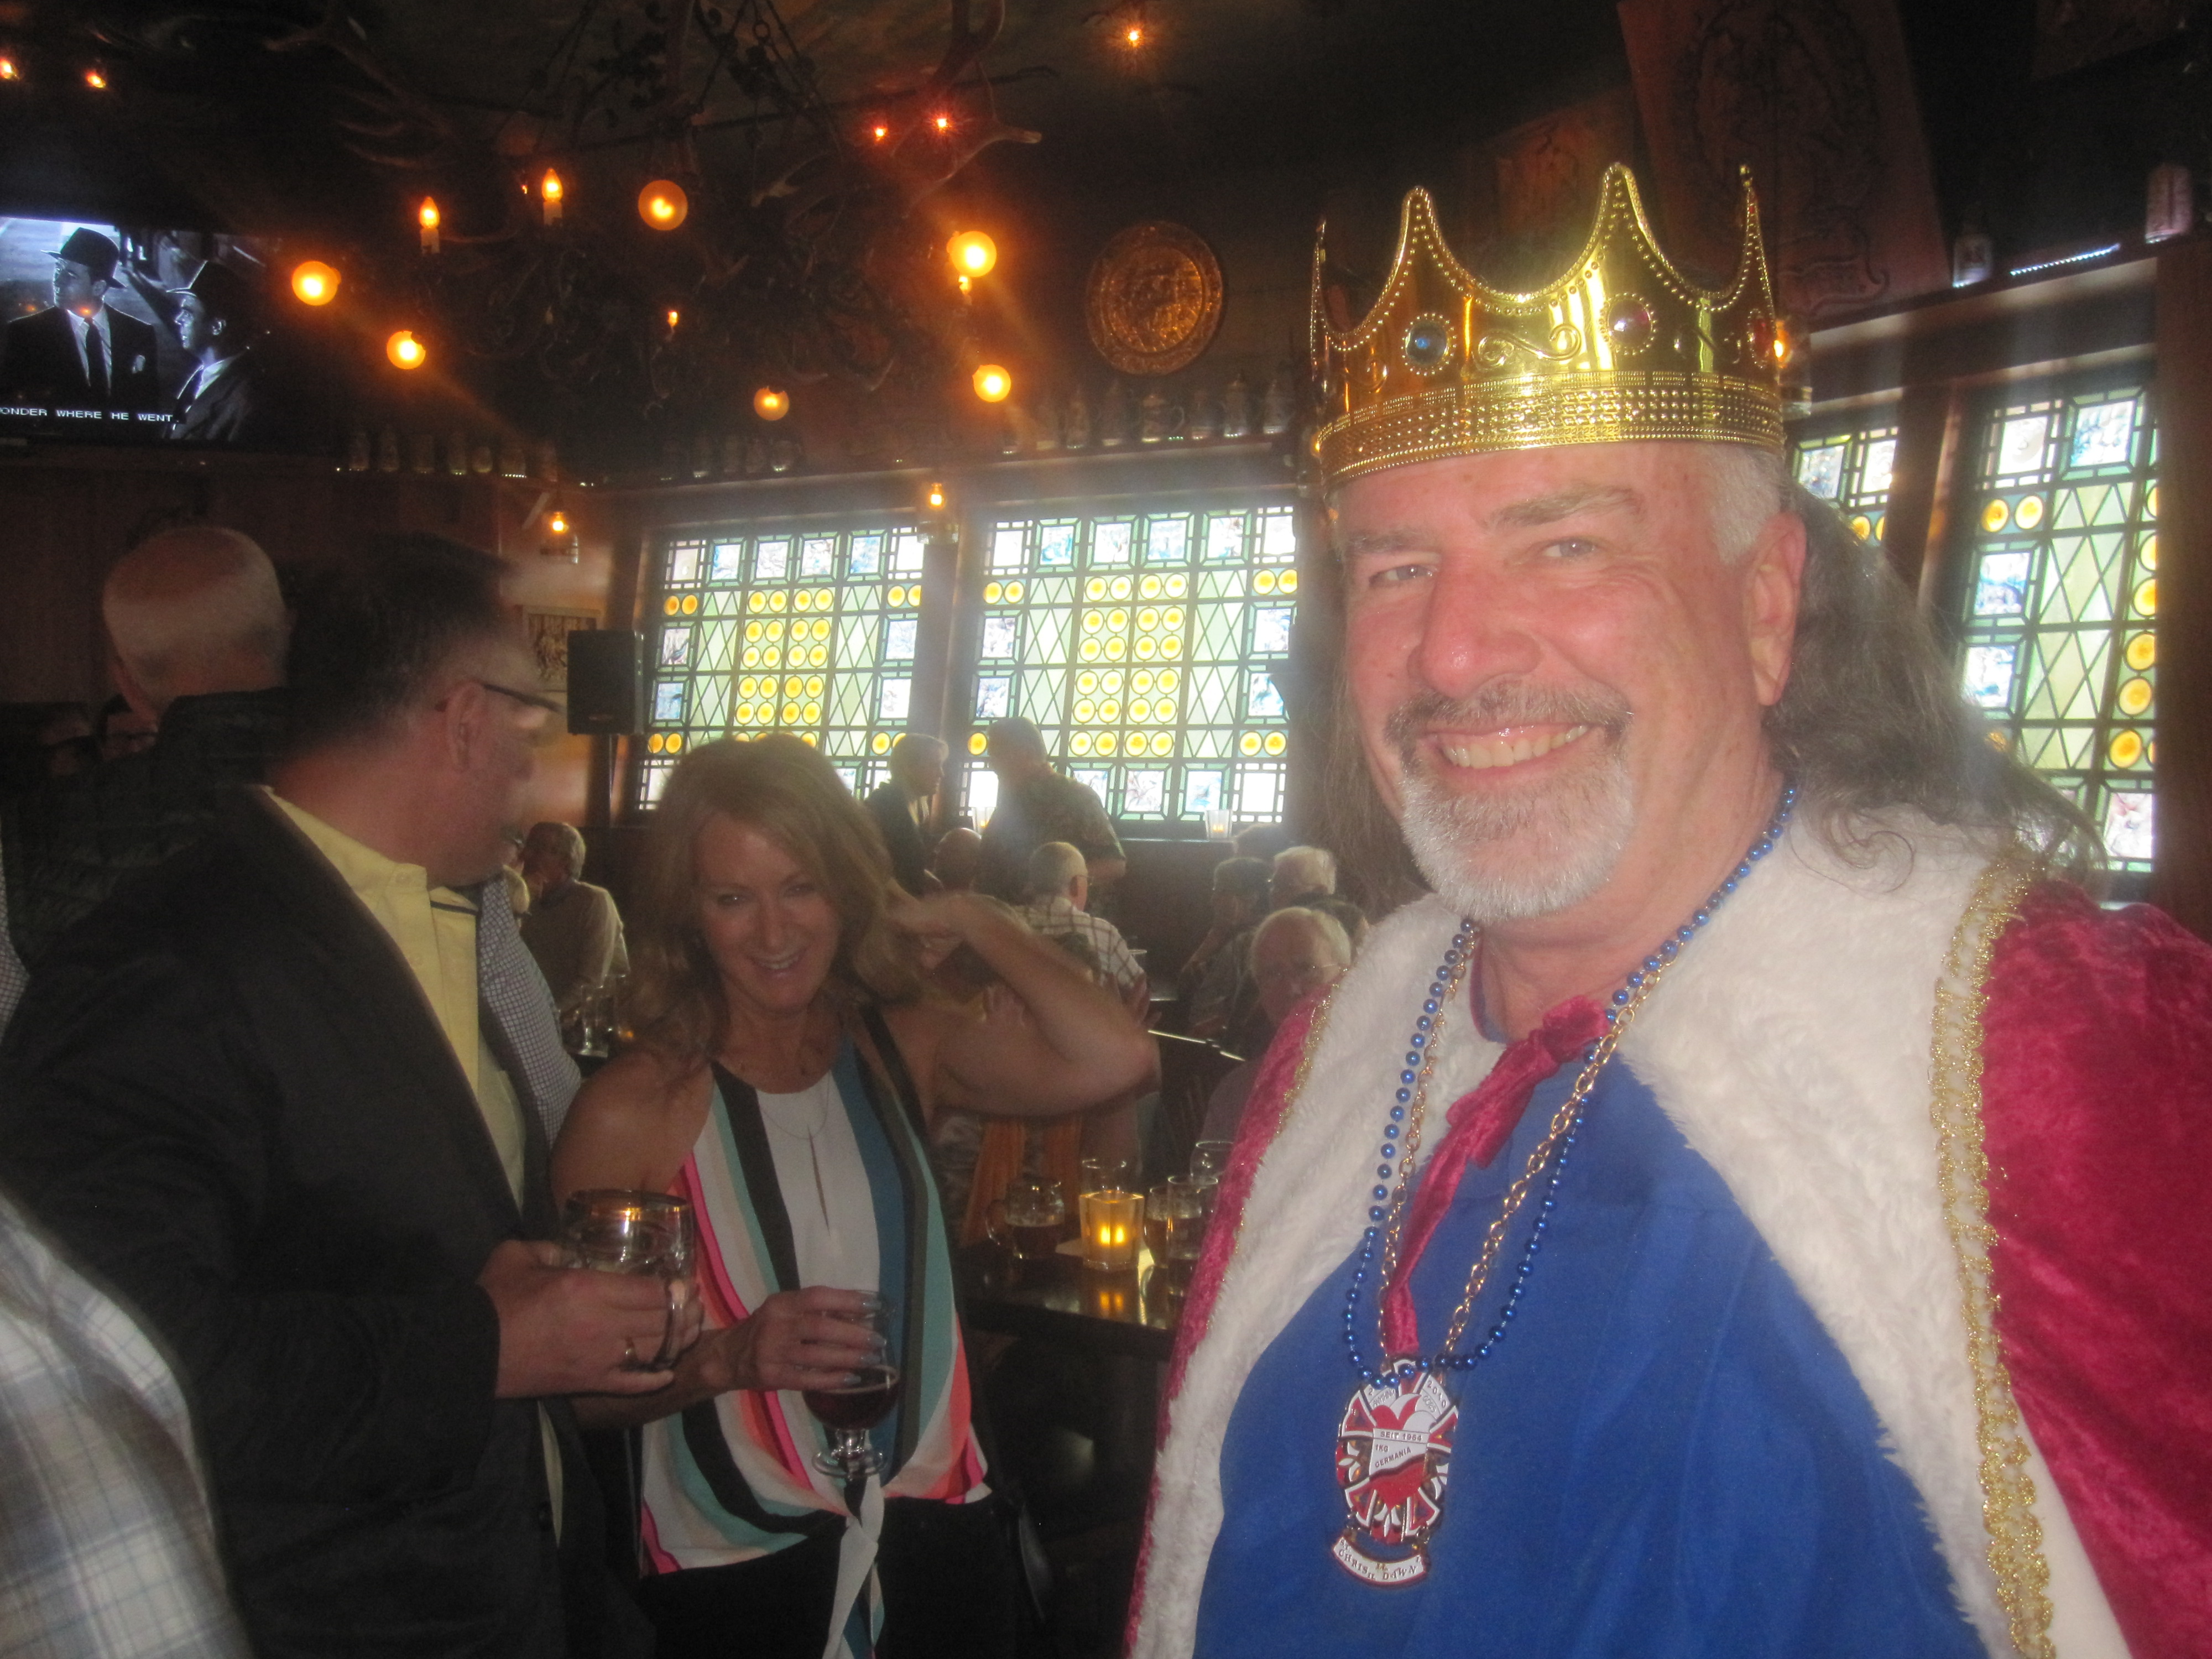 Jim Haertel dressed as King Gambrinus. Photo by Michael Horne.